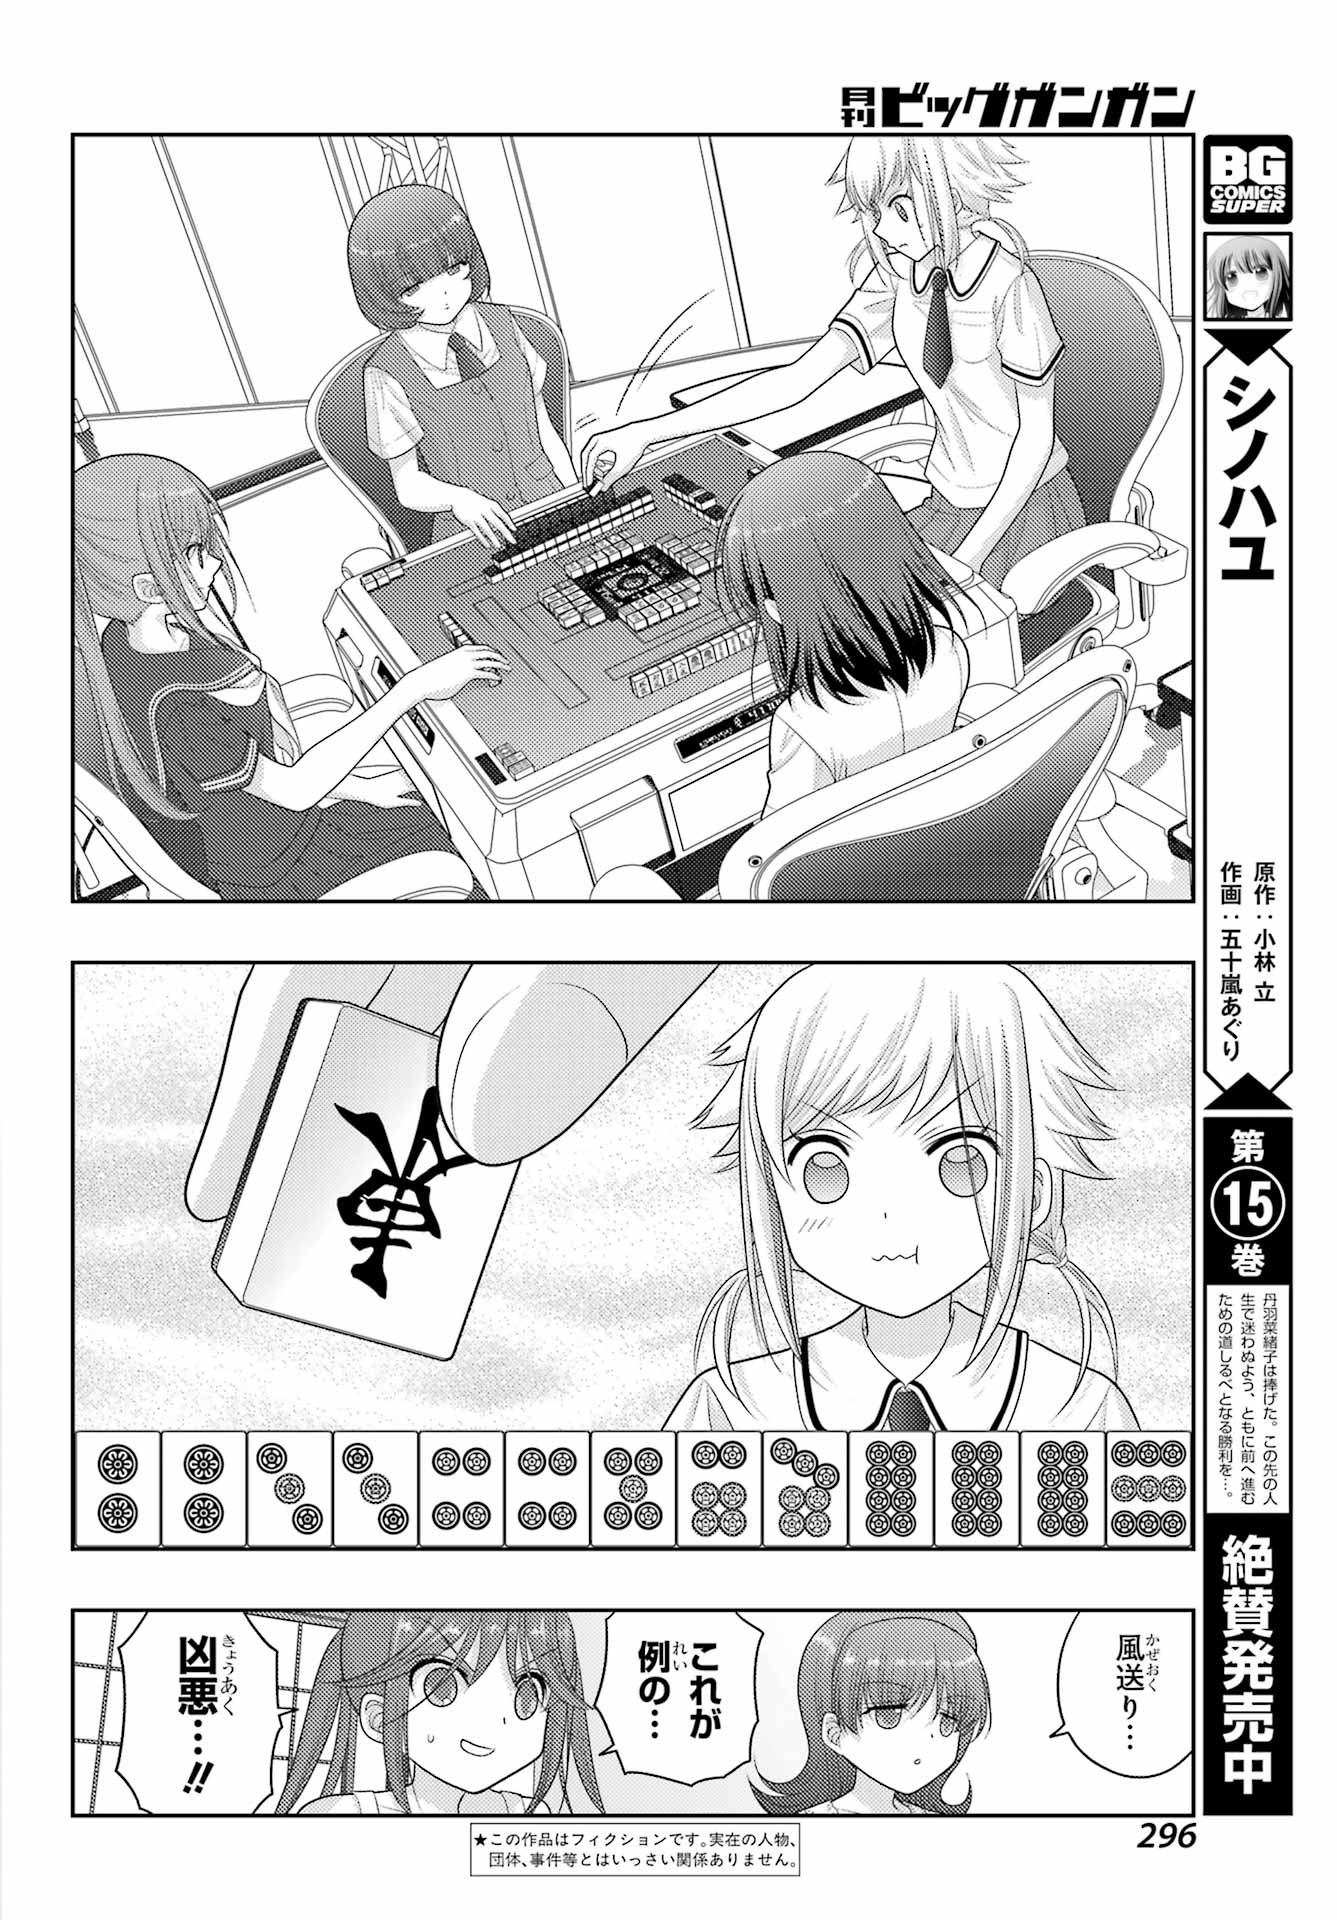 Shinohayu - The Dawn of Age Manga - Chapter 100 - Page 2